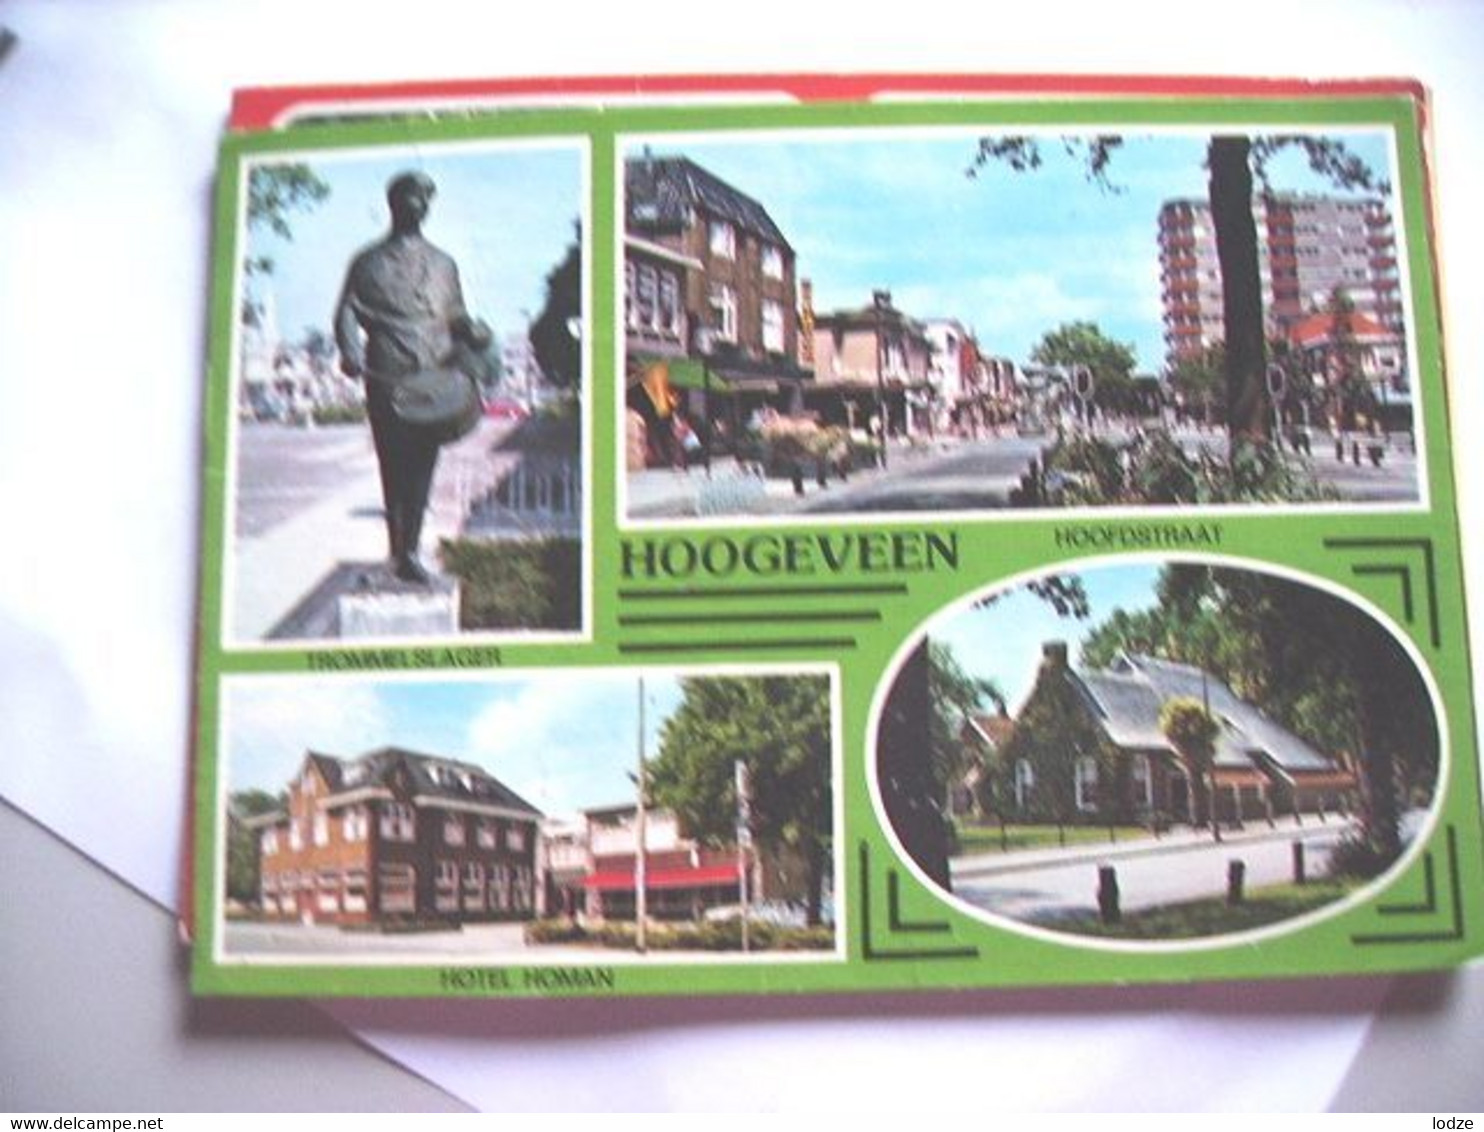 Nederland Holland Pays Bas Hoogeveen Met Hotel Homan - Hoogeveen